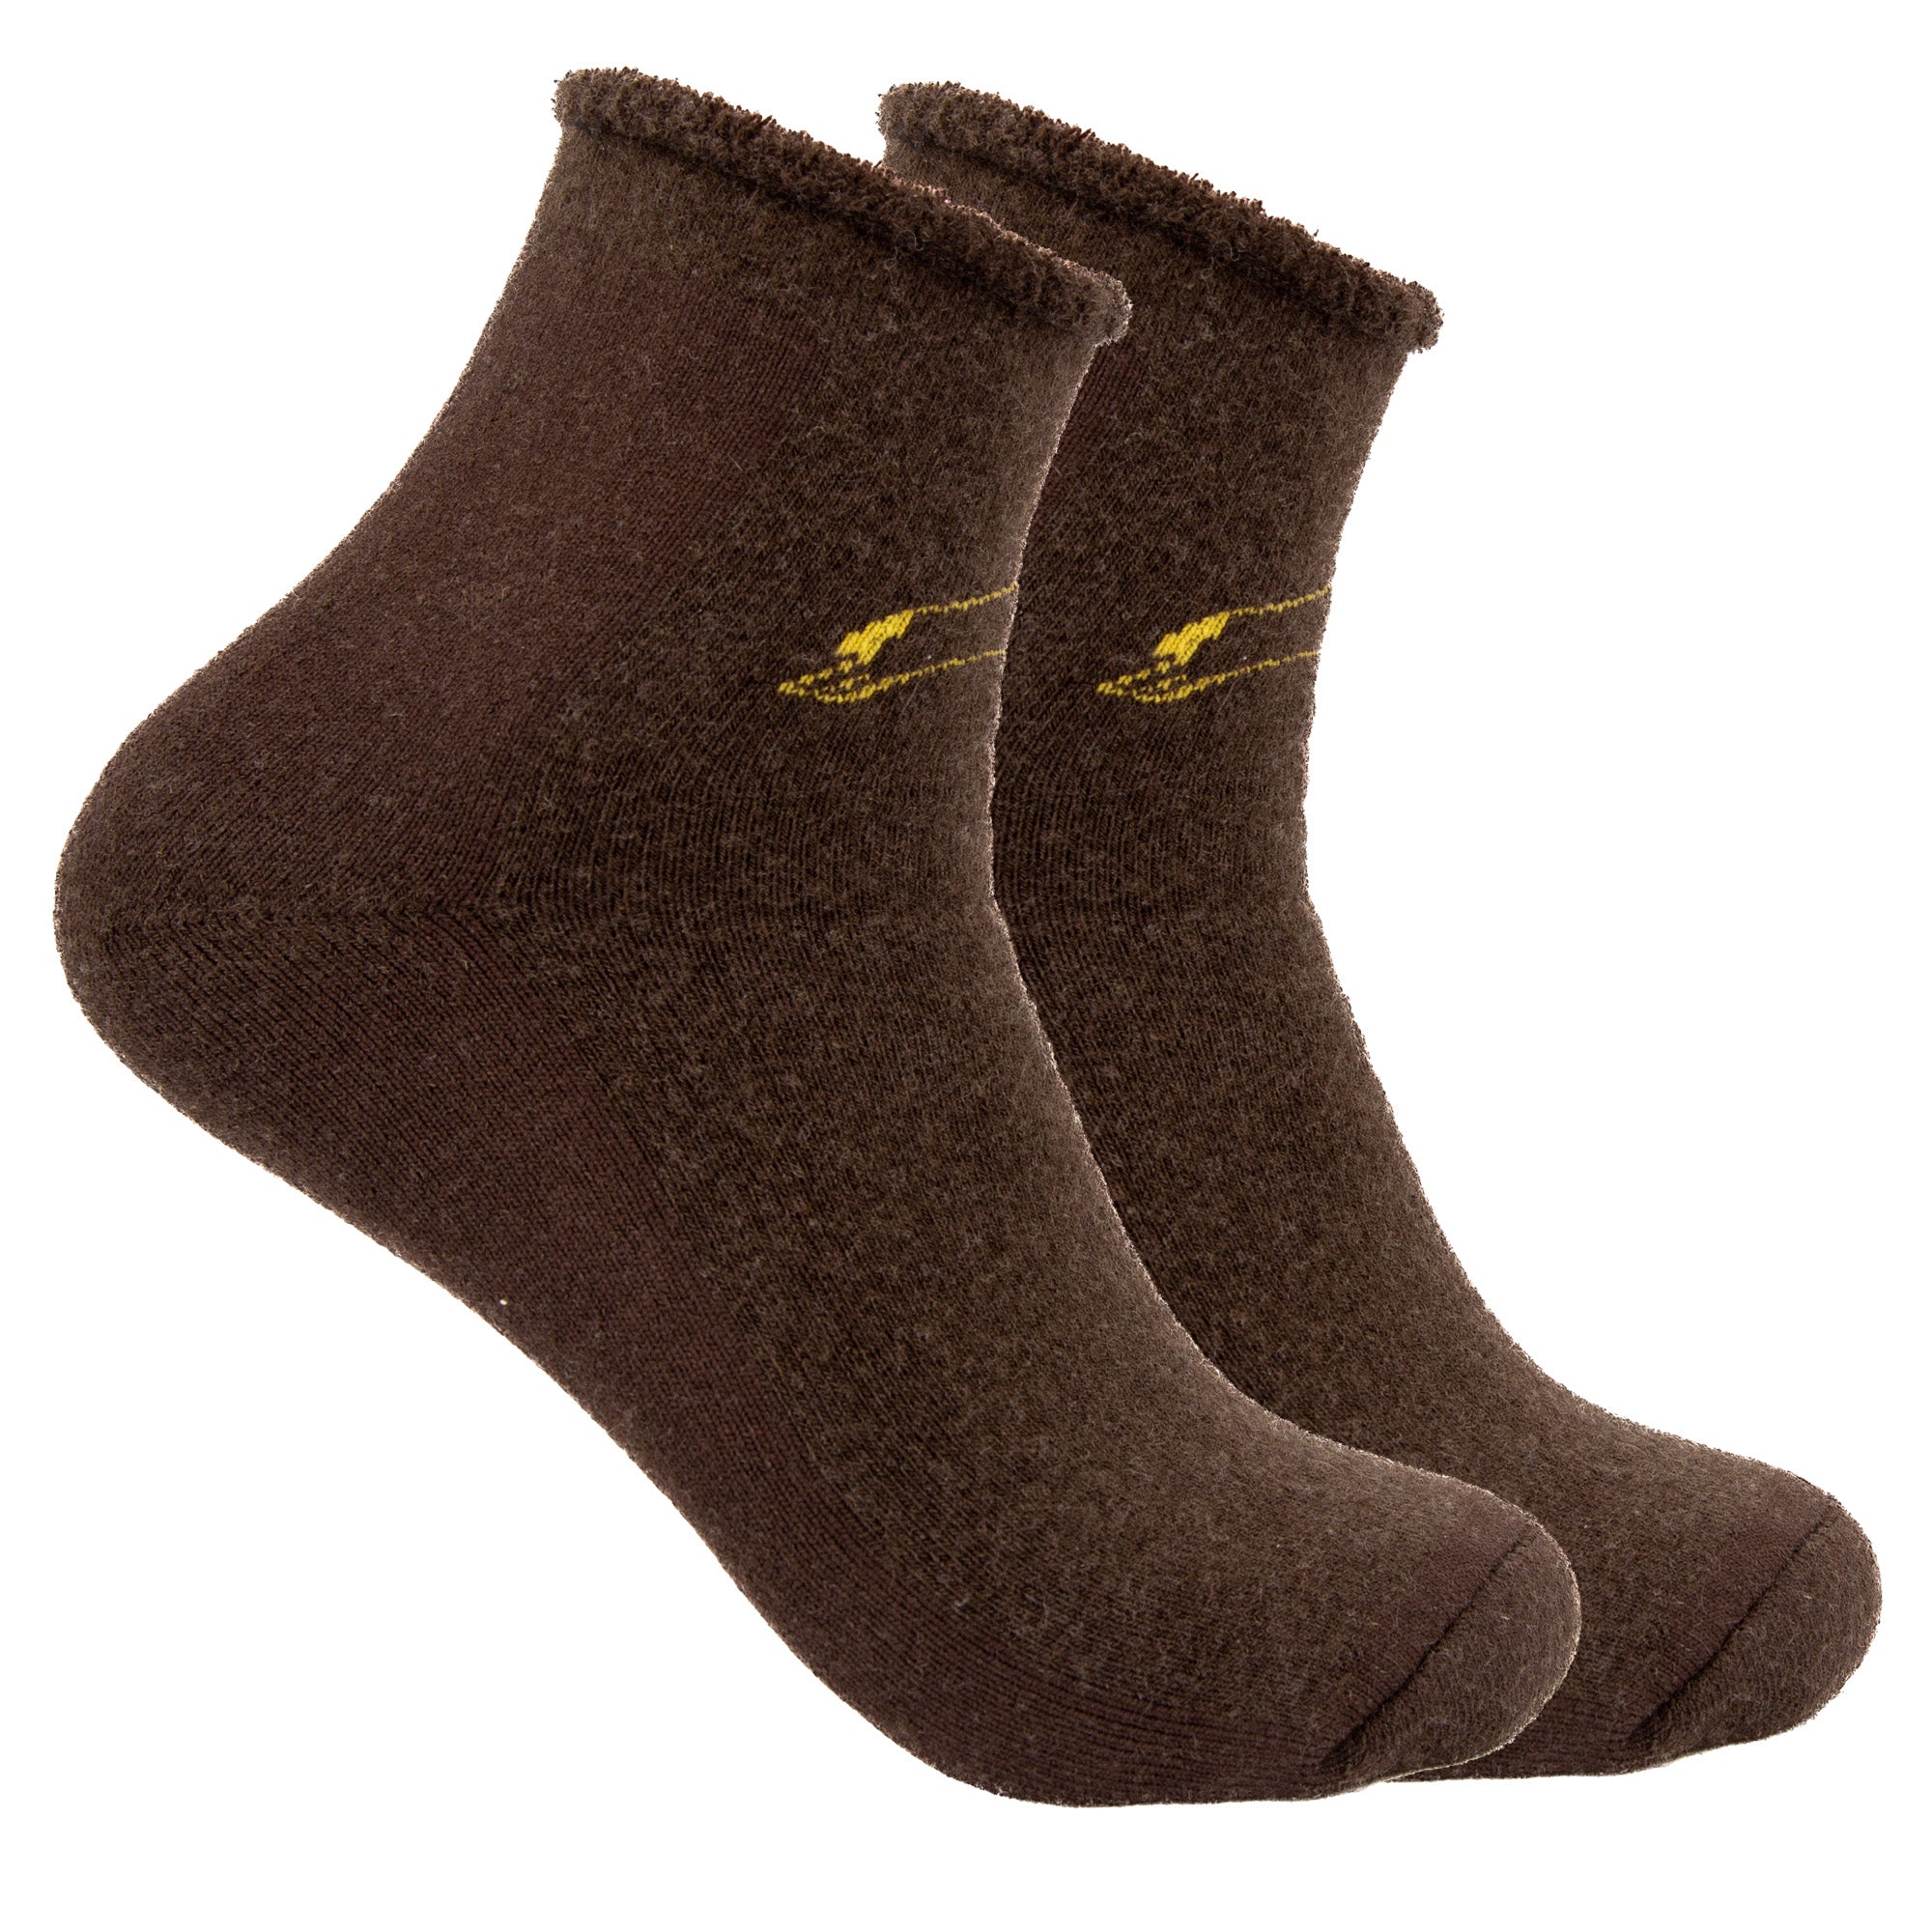 Organic Wool Socks - Merino Wool Thick Socks Made in USA - Eco Girl Shop